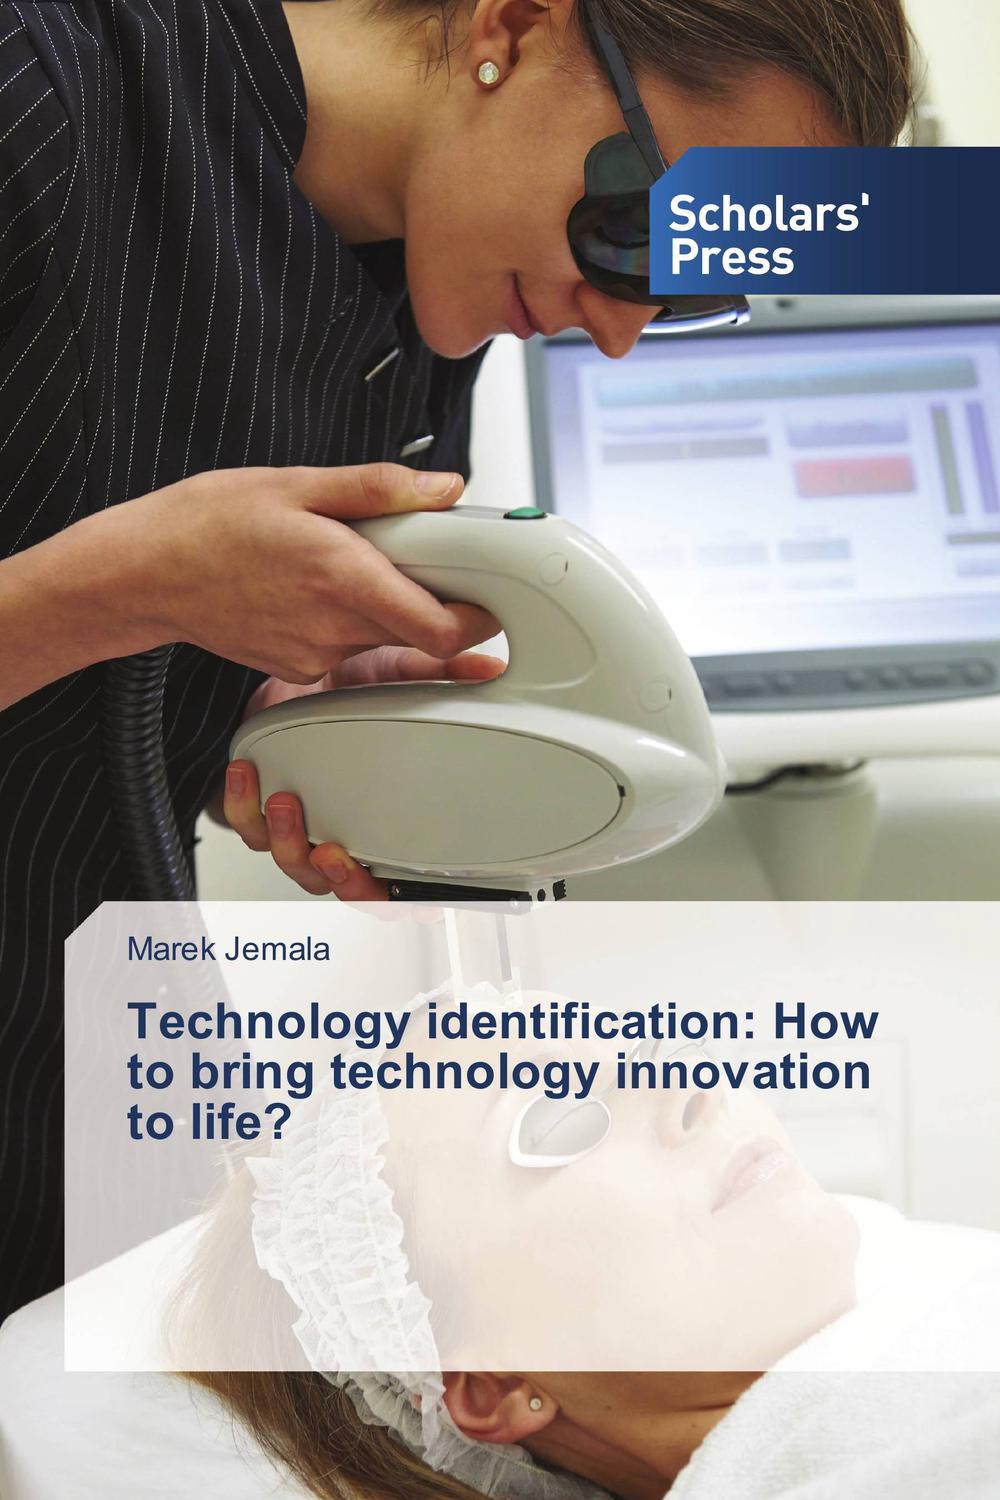 Technology identification: How to bring technology innovation to life? - Marek Jemala